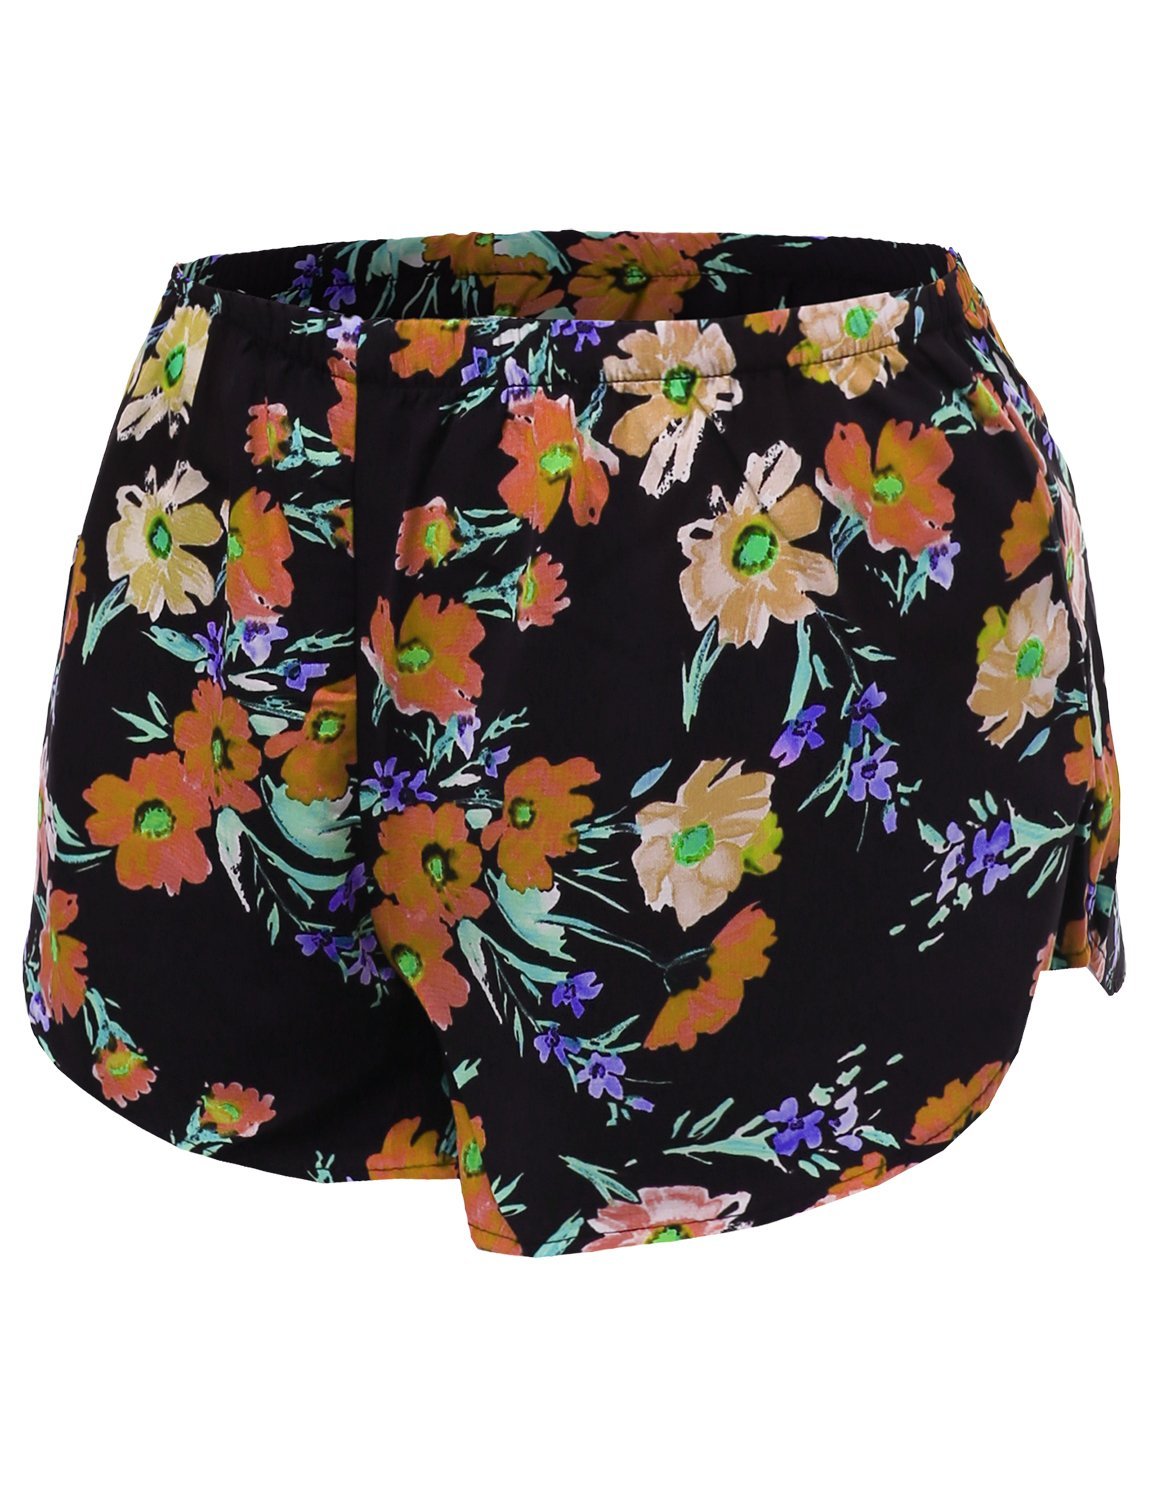 Awesome21 Women's Floral Flower Print Elastic Waist Short Pant Shorts